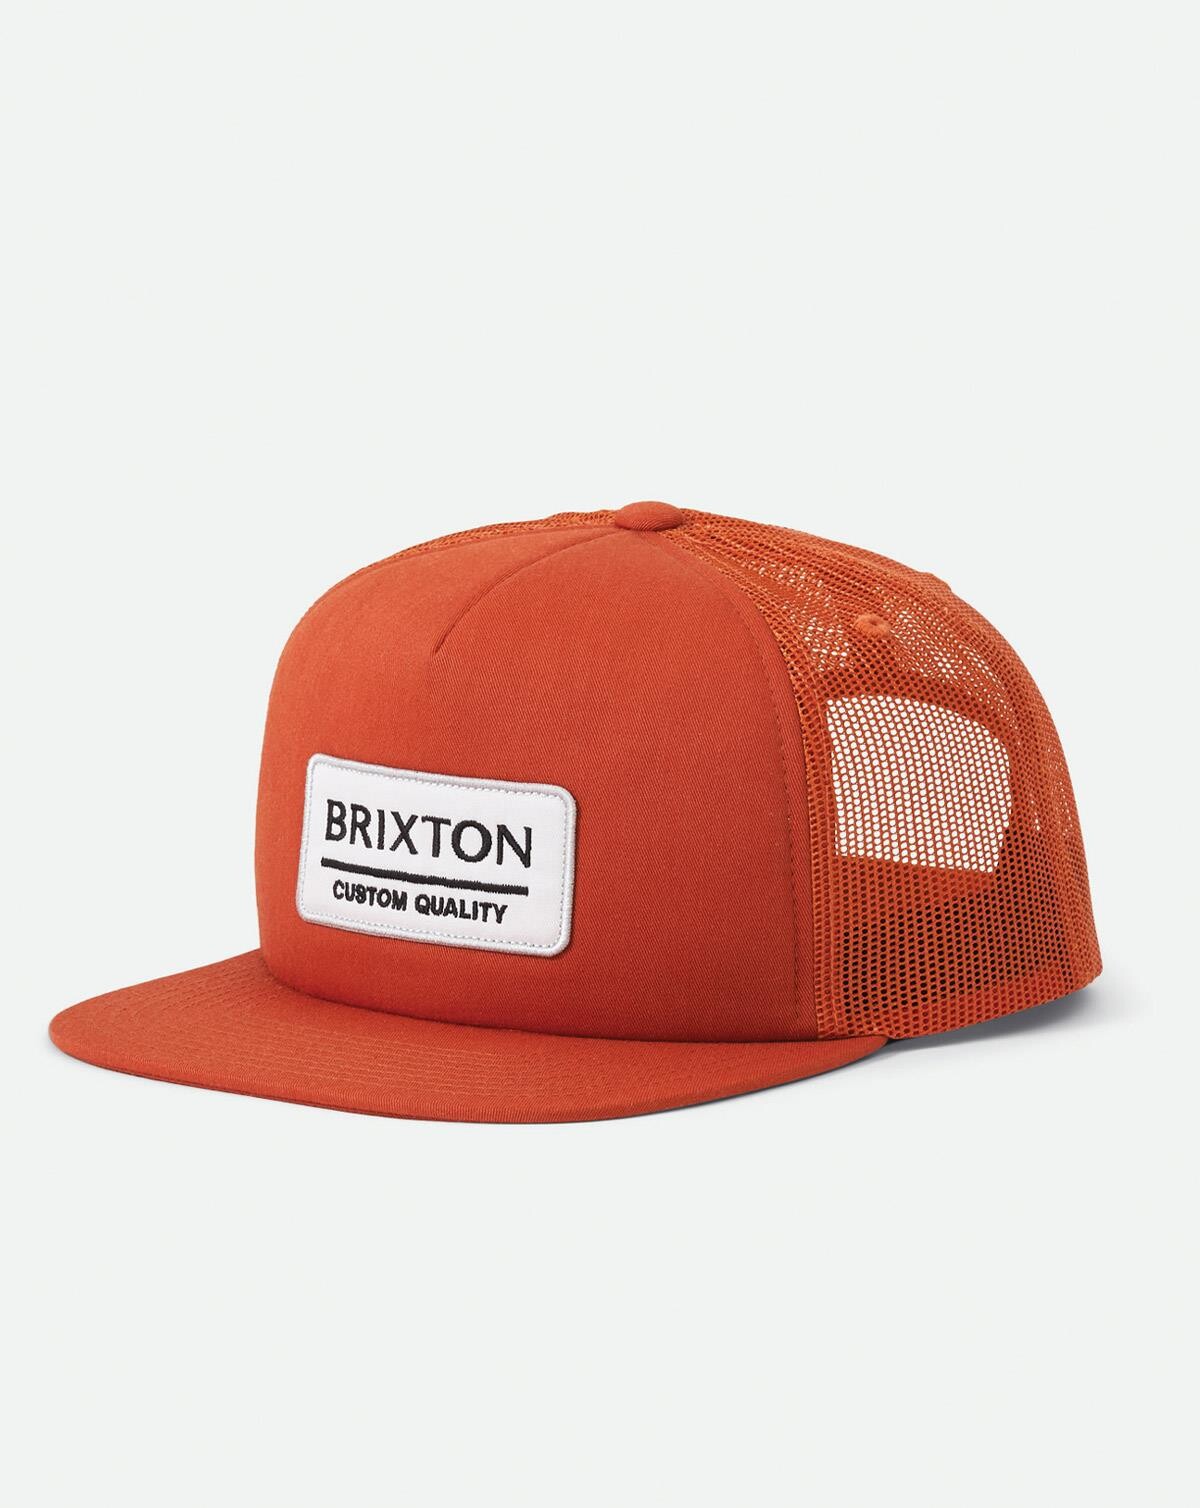 Brixton Palmer Proper Mesh Snapback (Orange, One Size)